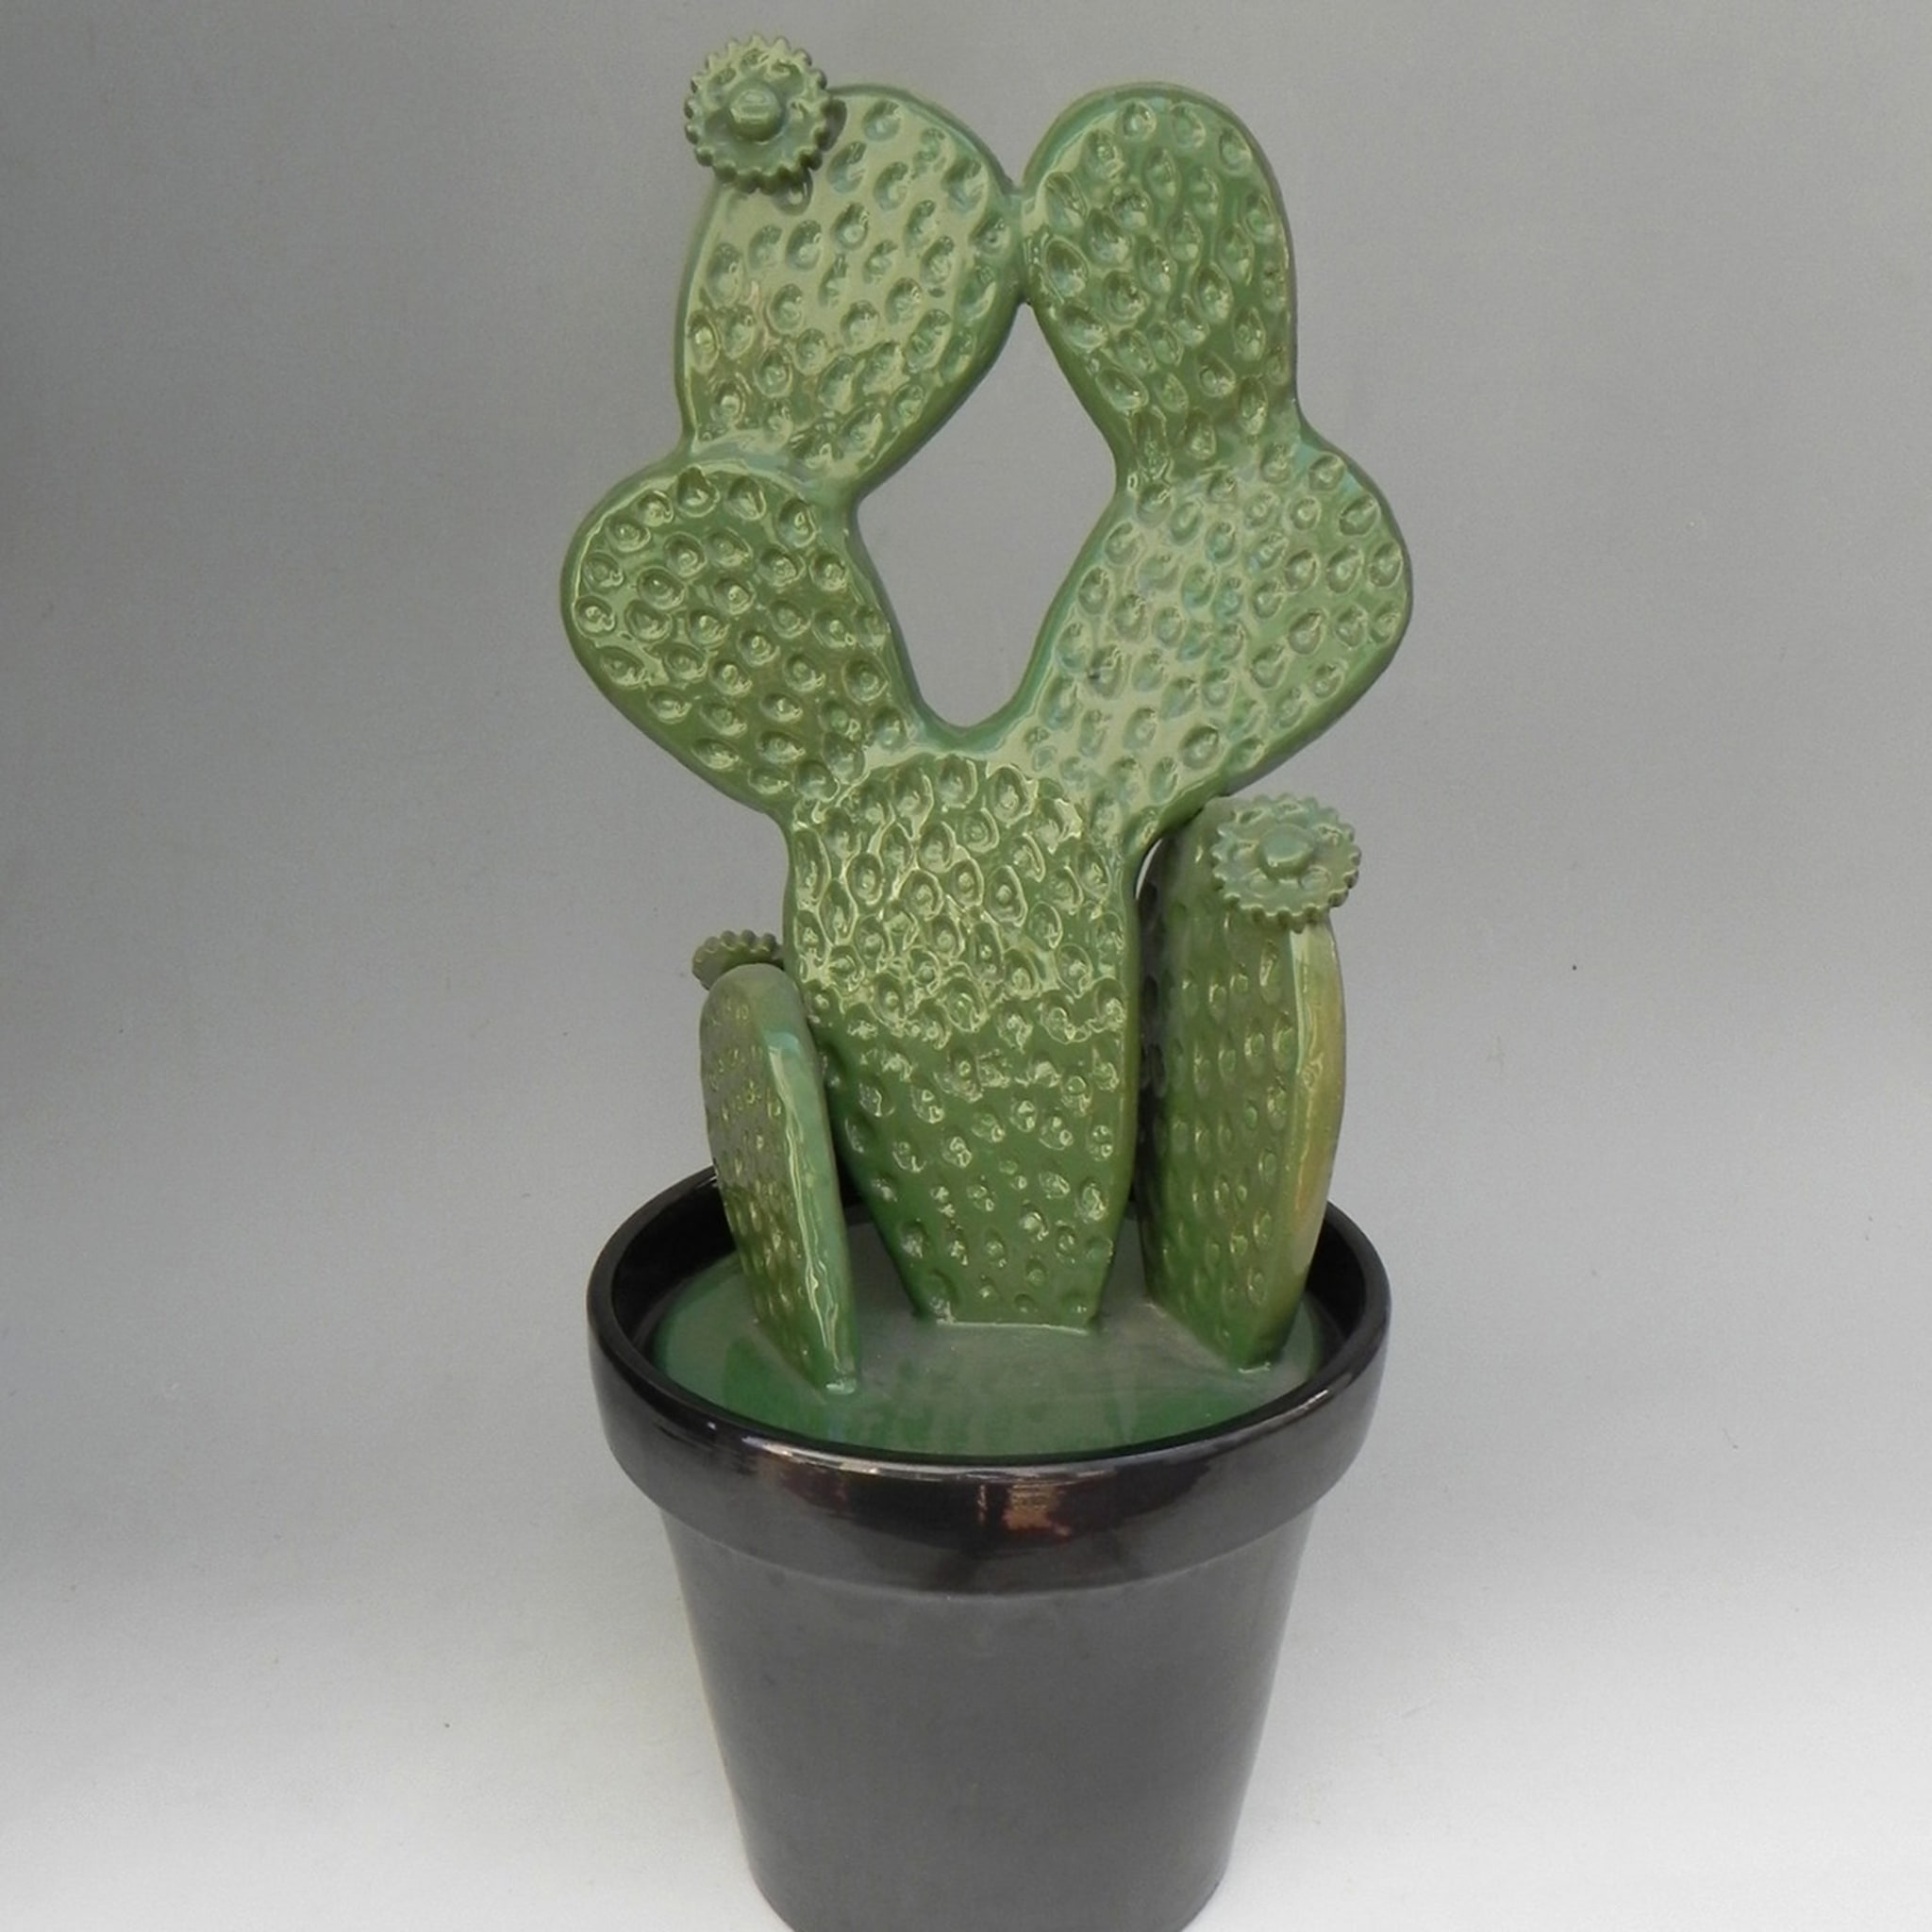 Gutierrez Street Ceramic Cactus Sculpture by Tullio Mazzotti - Alternative view 2